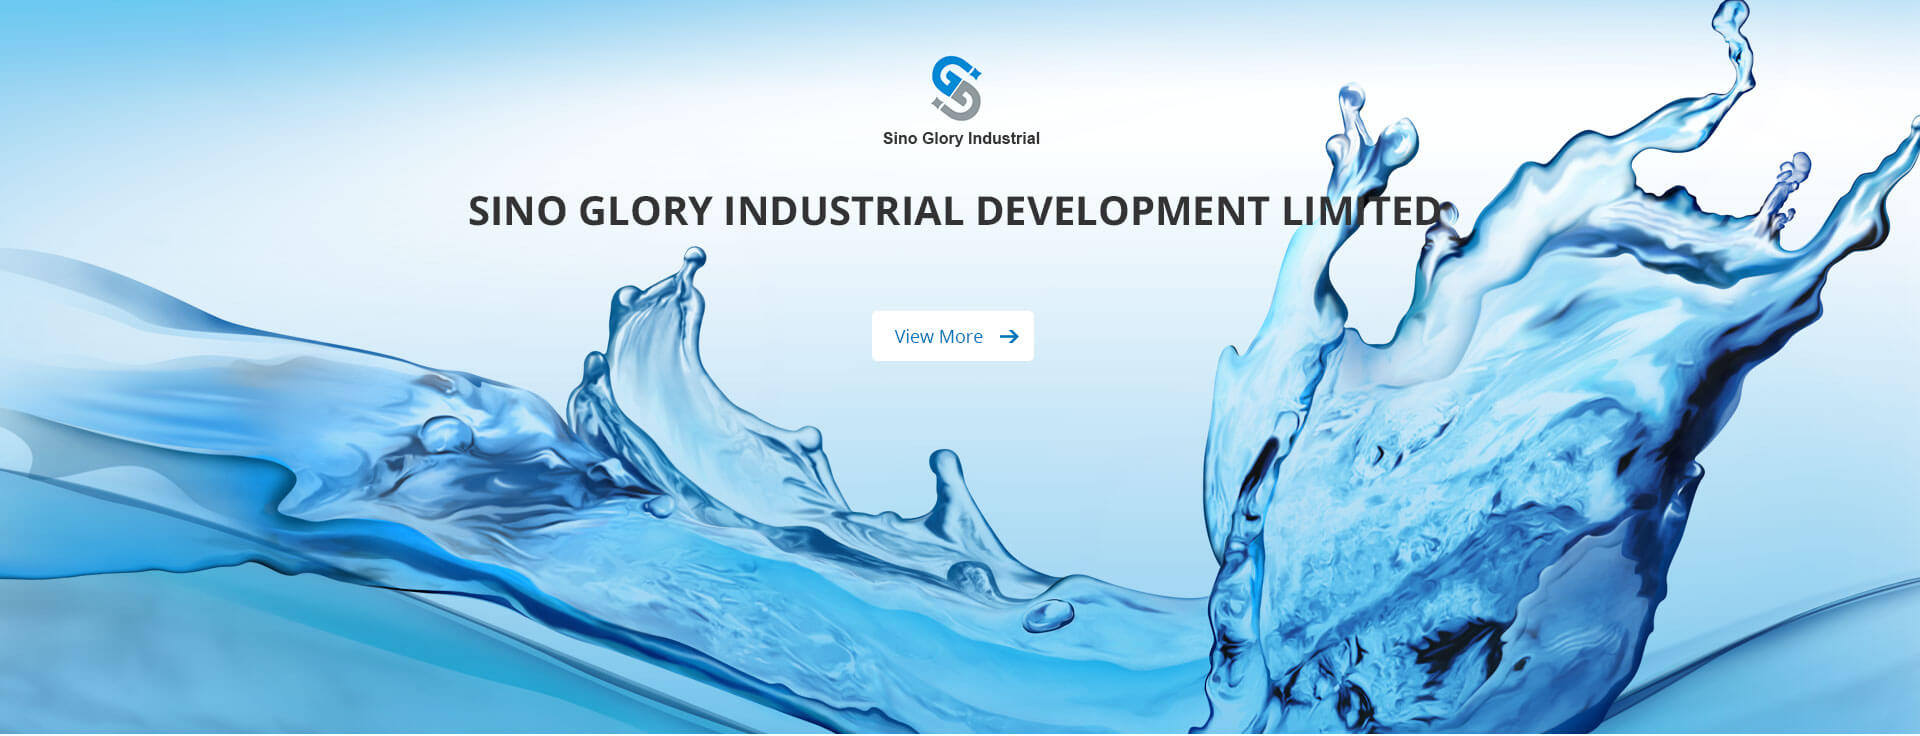 Sino Glory Industrial Development Limited